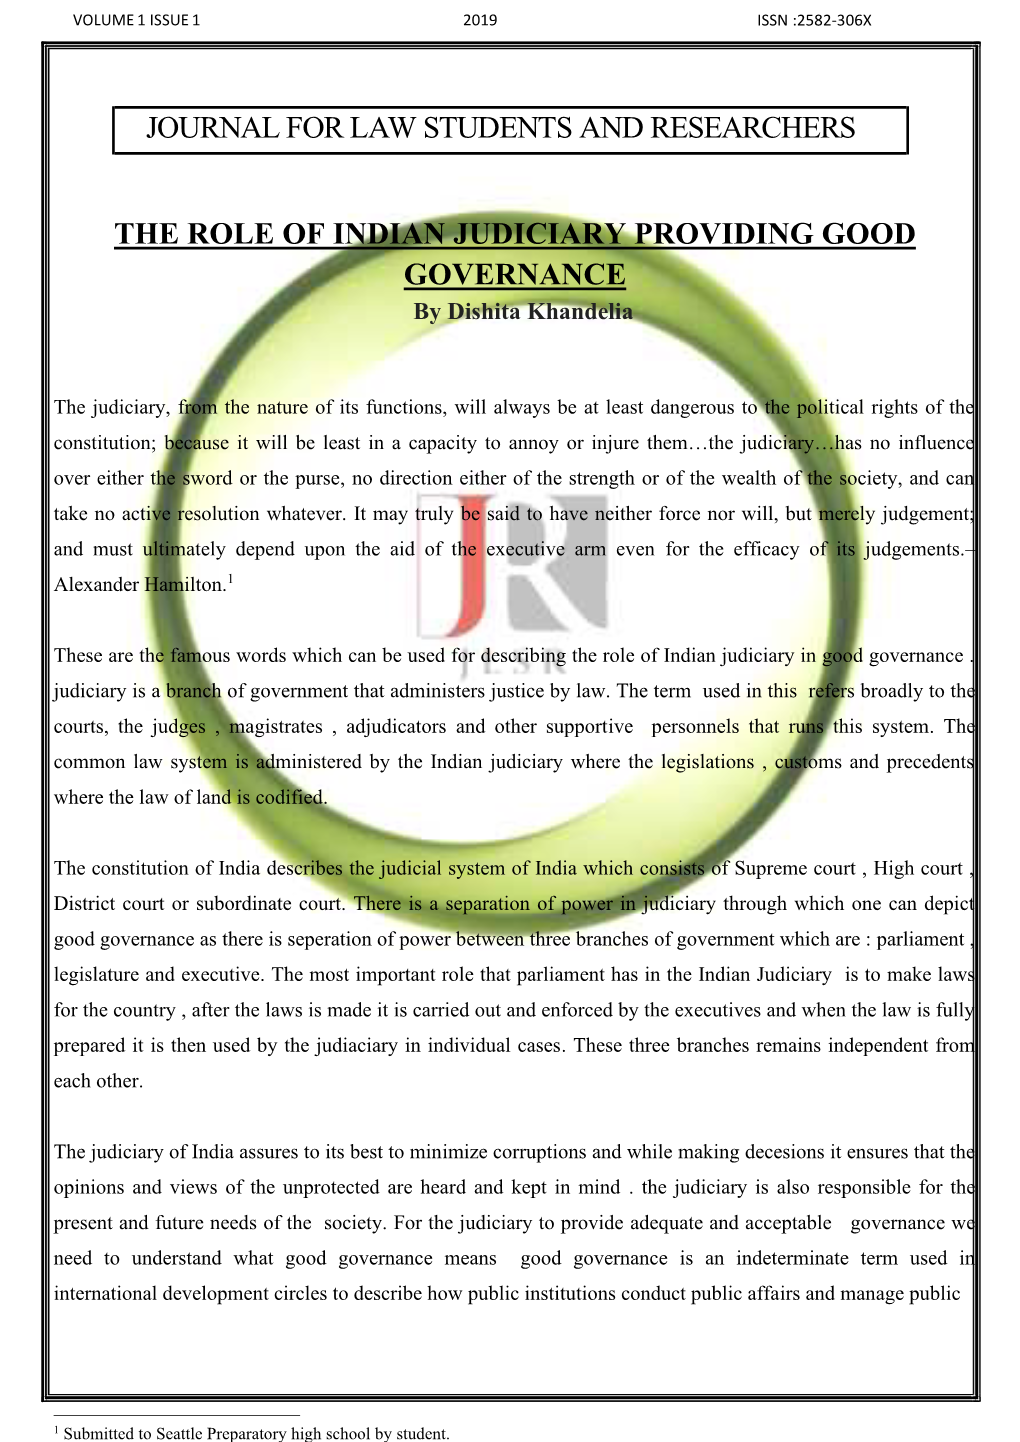 THE ROLE of INDIAN JUDICIARY PROVIDING GOOD GOVERNANCE by Dishita Khandelia